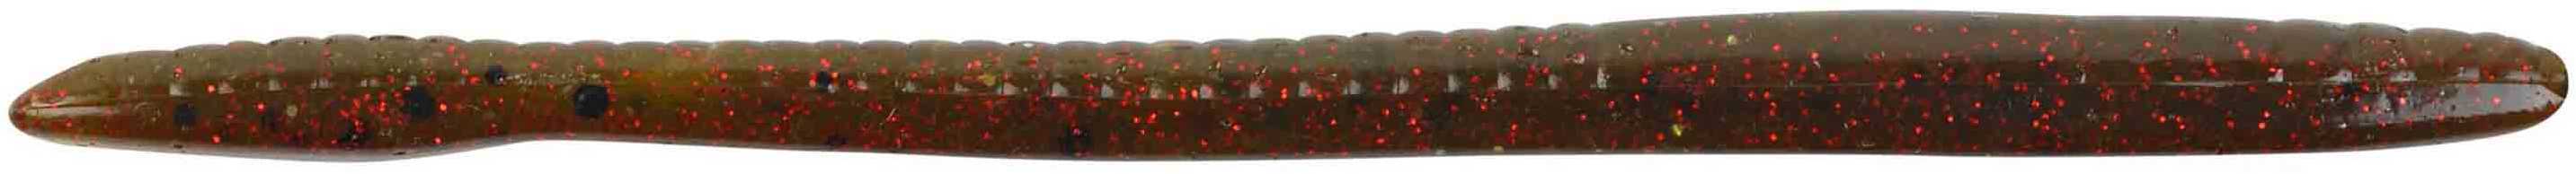 Berkley Havoc Bottom Hopper 6-1/4in 12per bag Green Pumpkin Red Md#: HVMBH6-GPRD